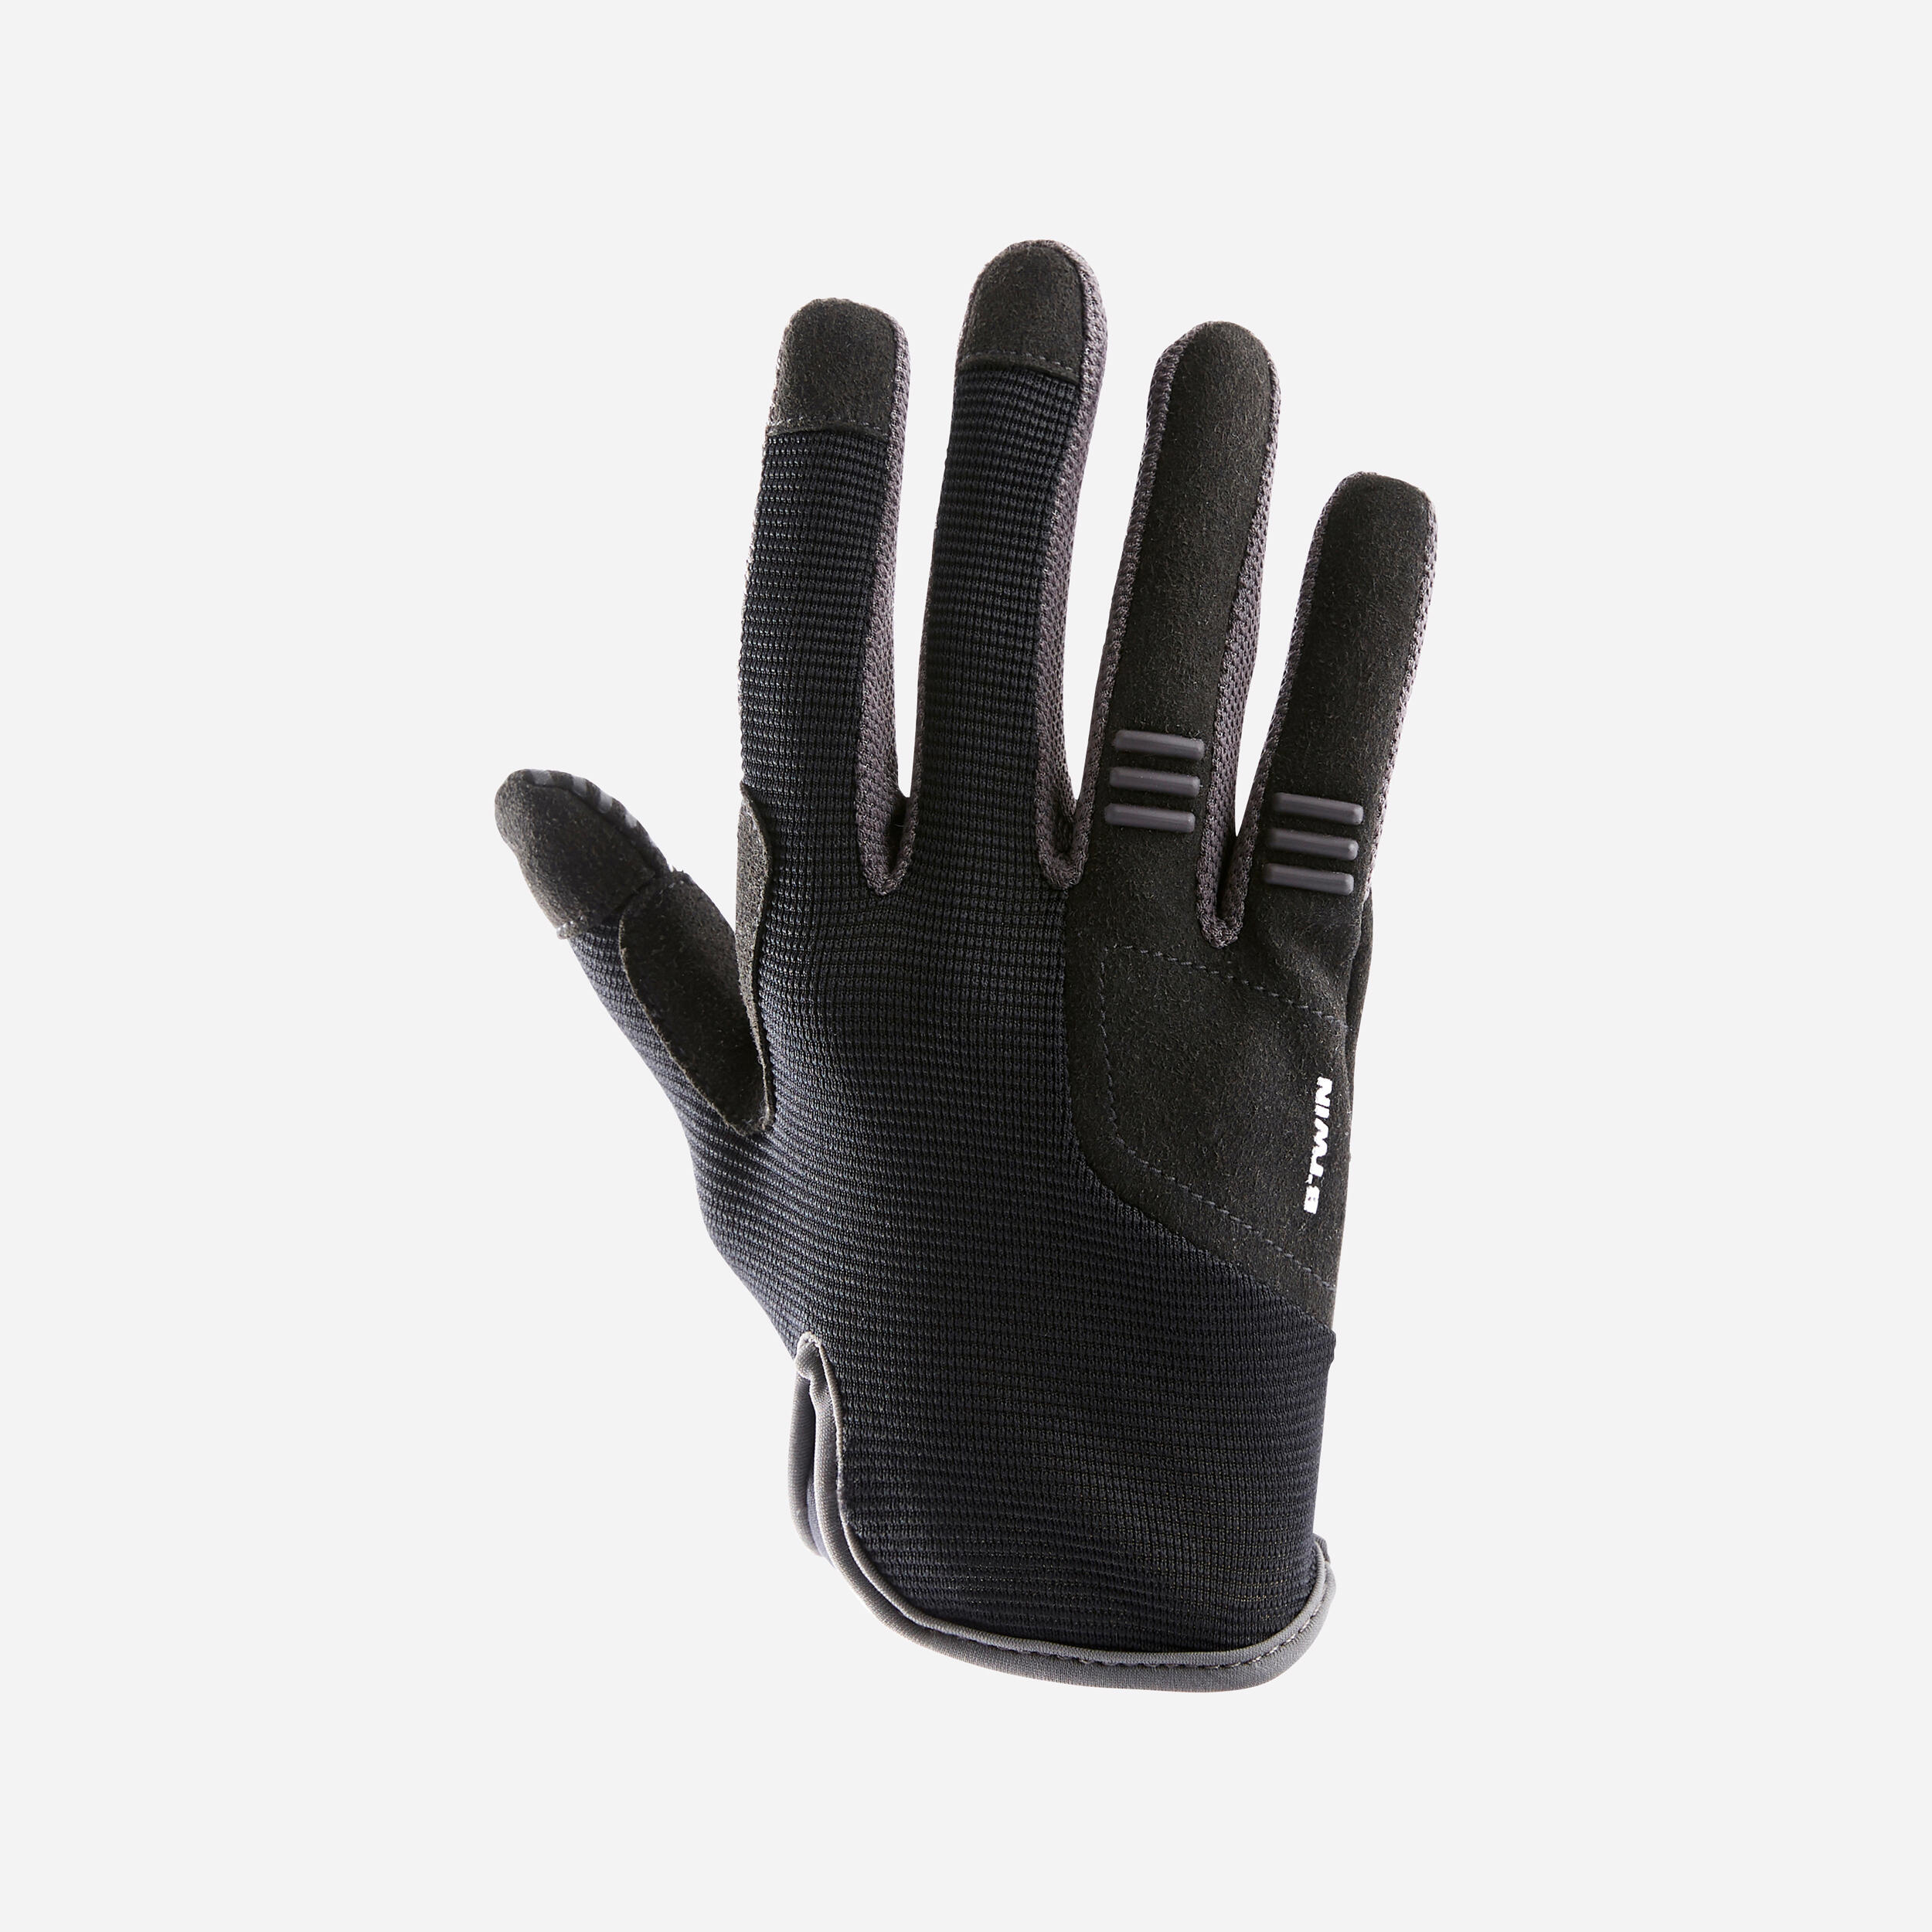 Kids' Long Cycling Gloves - Black/Grey 1/3